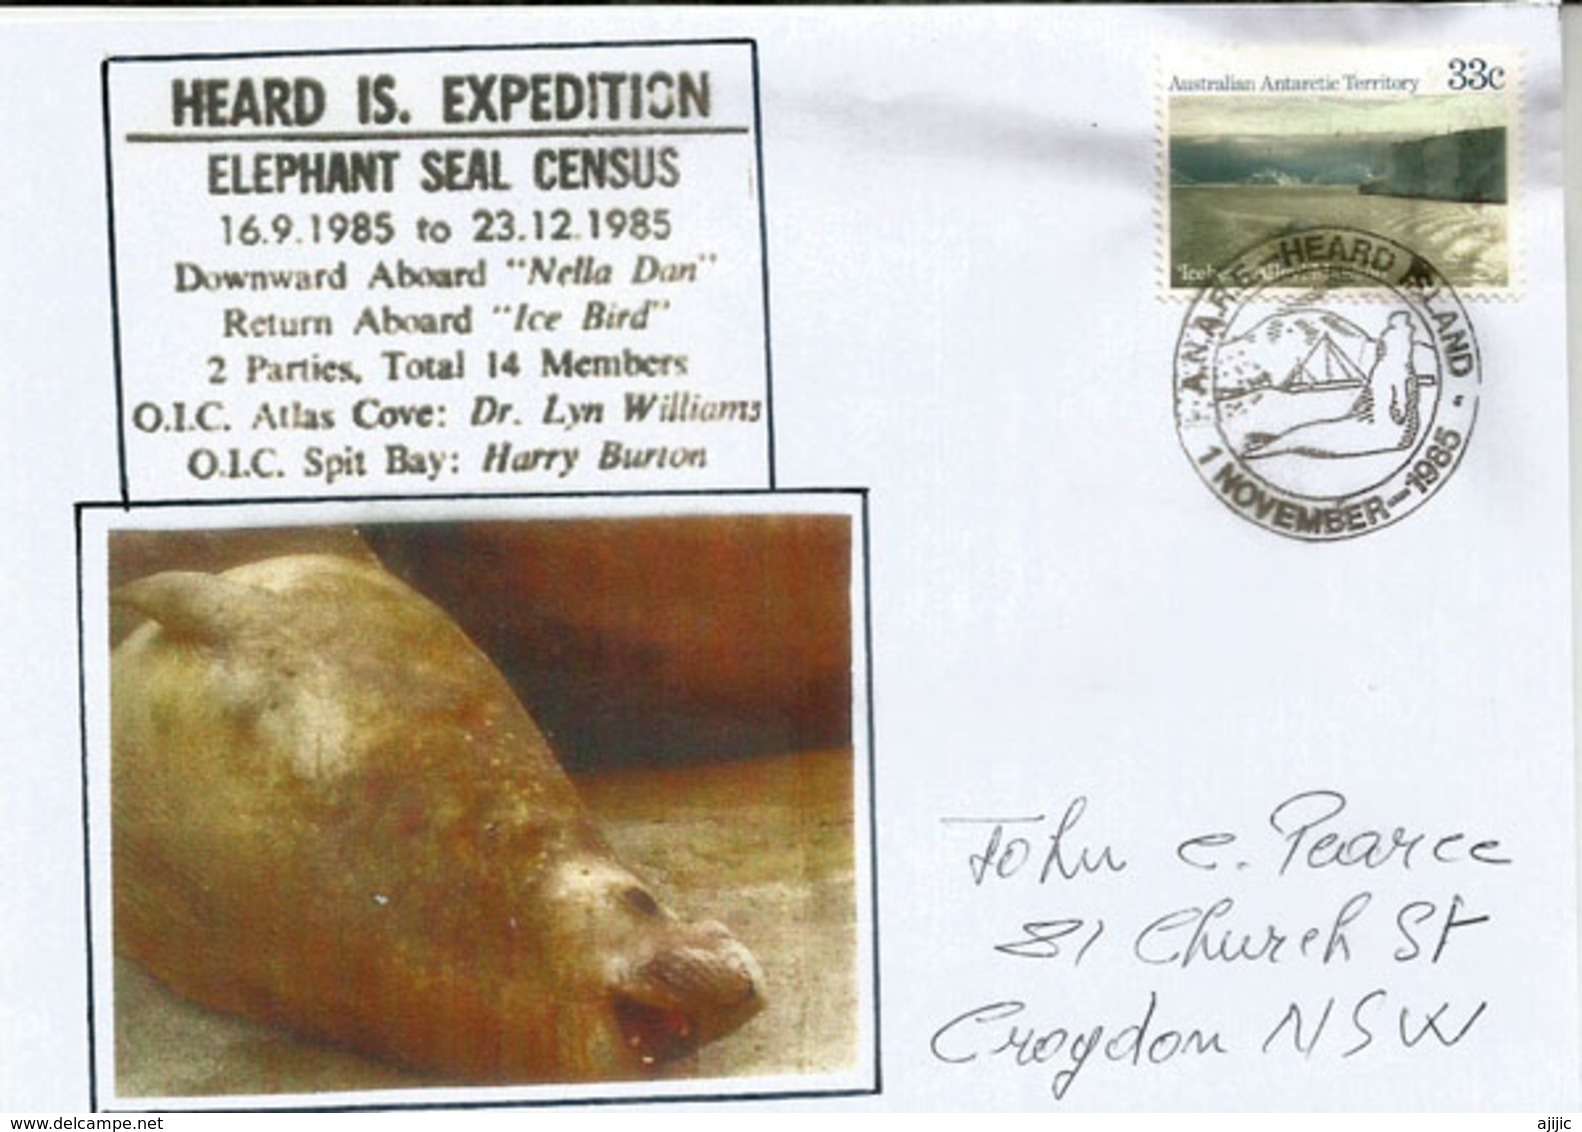 Heard Island Expedition 1985 (Elephant Seal Census), With German Ship MV Icebird (Hamburg), Addressed To Australia - Lettres & Documents